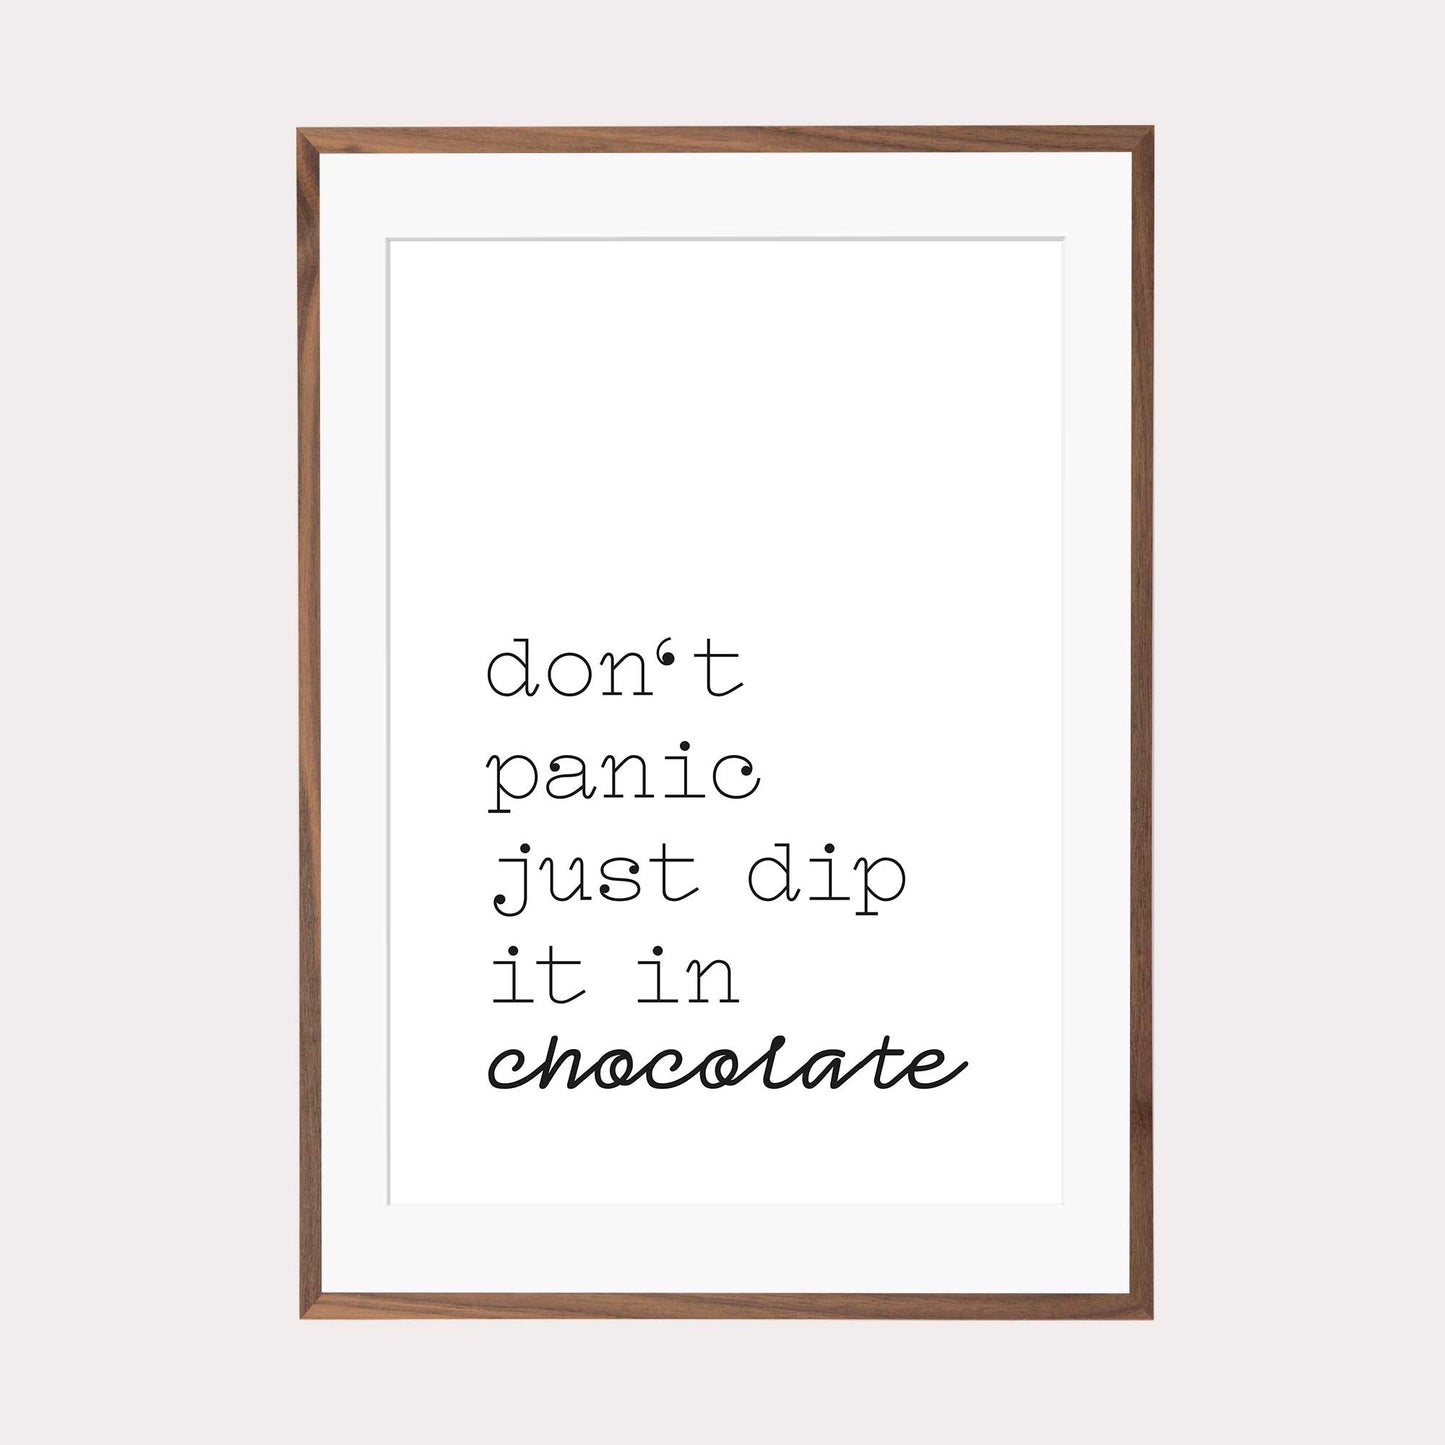 Art Print | Just dip it in chocolate